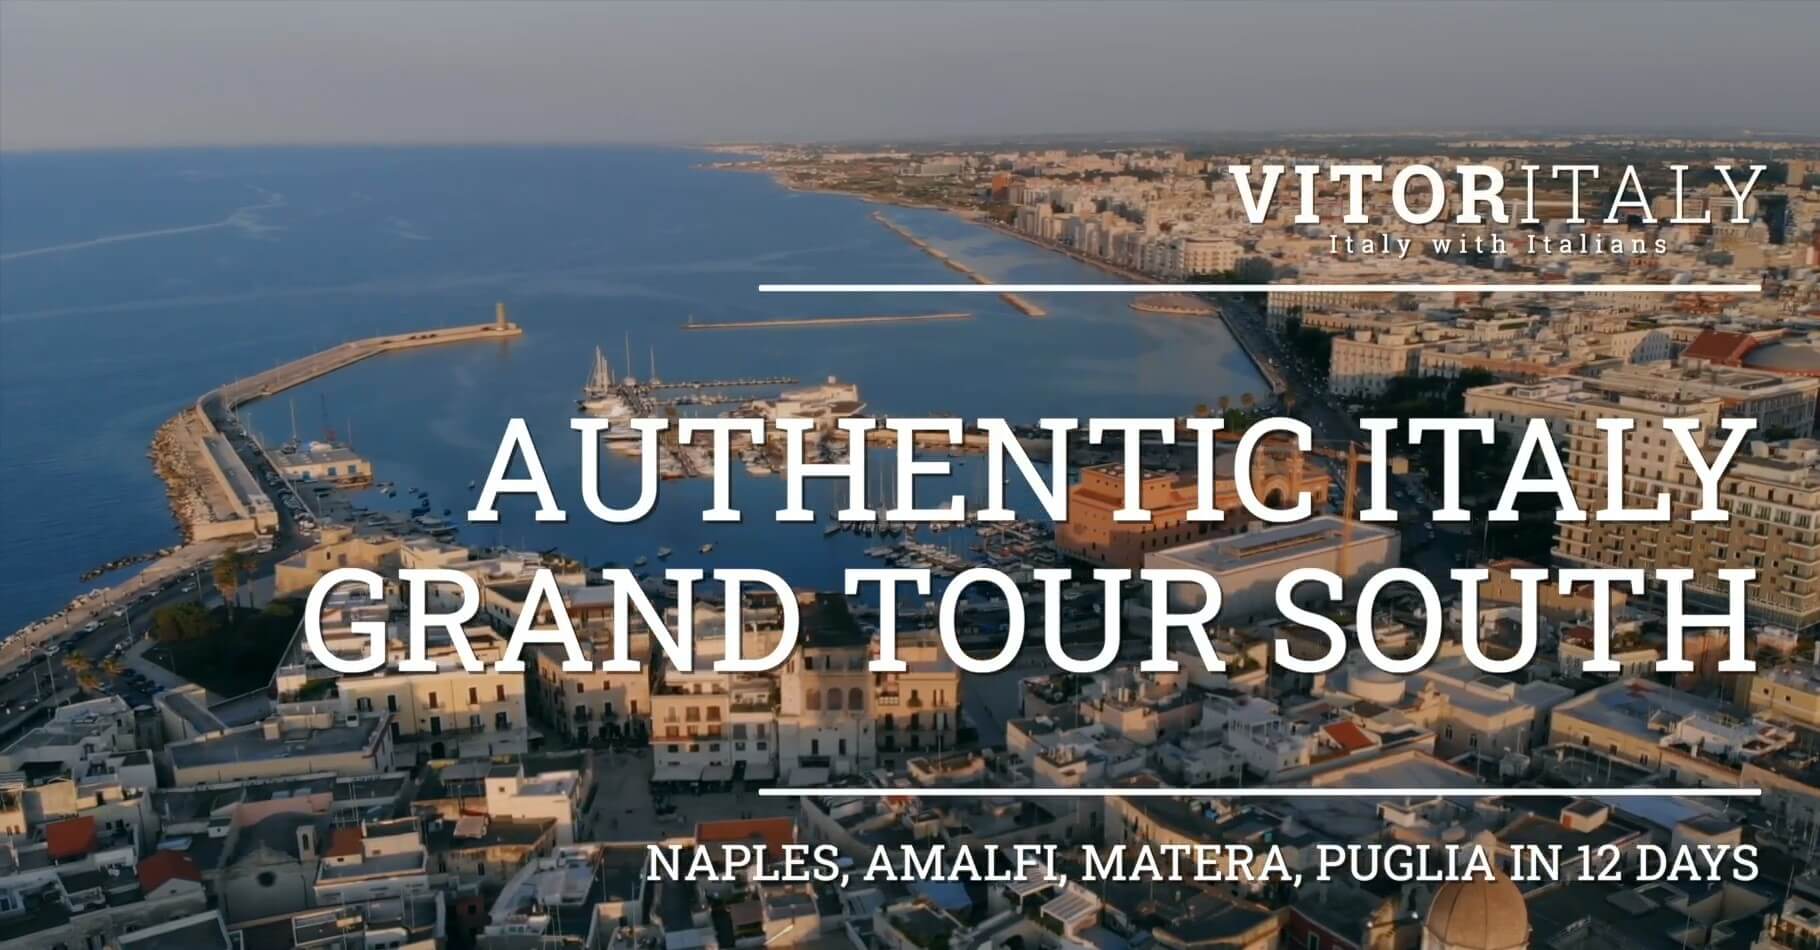 AUTHENTIC ITALY PRIVATE TOUR SOUTH - Naples, Amalfi, Matera, Puglia